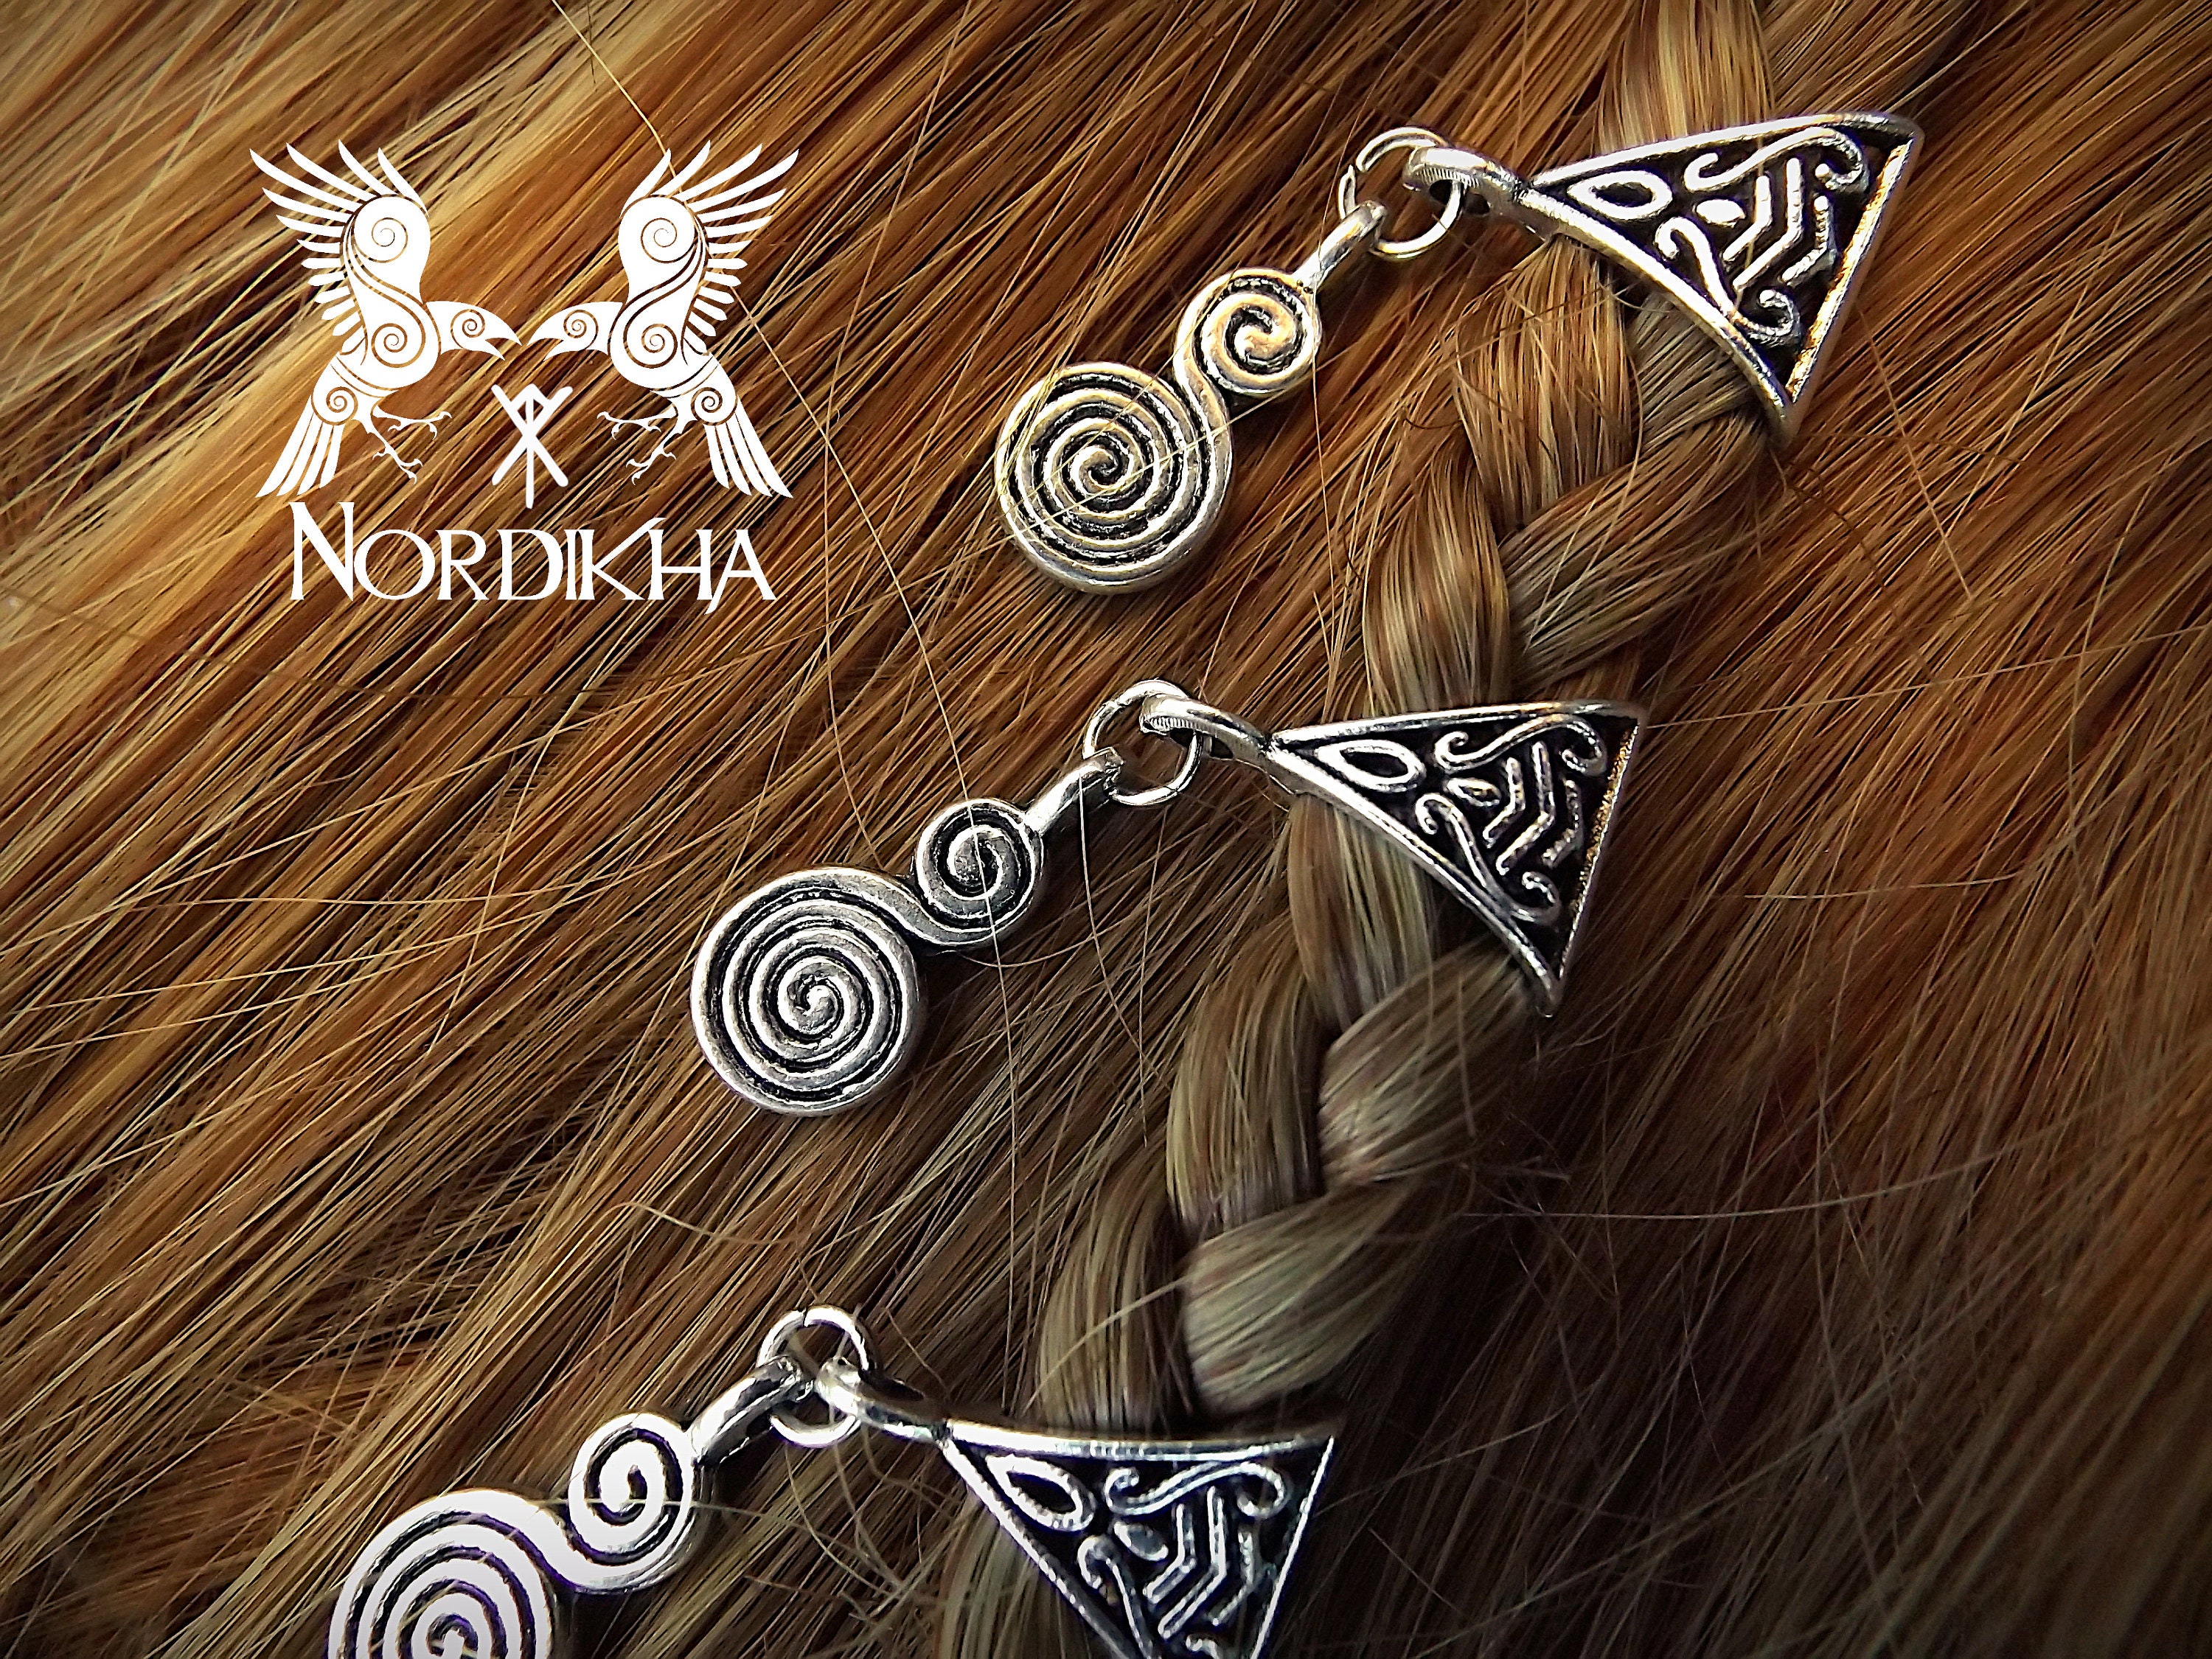 2 Pcs Spiral Antiqued Copper Viking Hair Beads Beard Jewelry